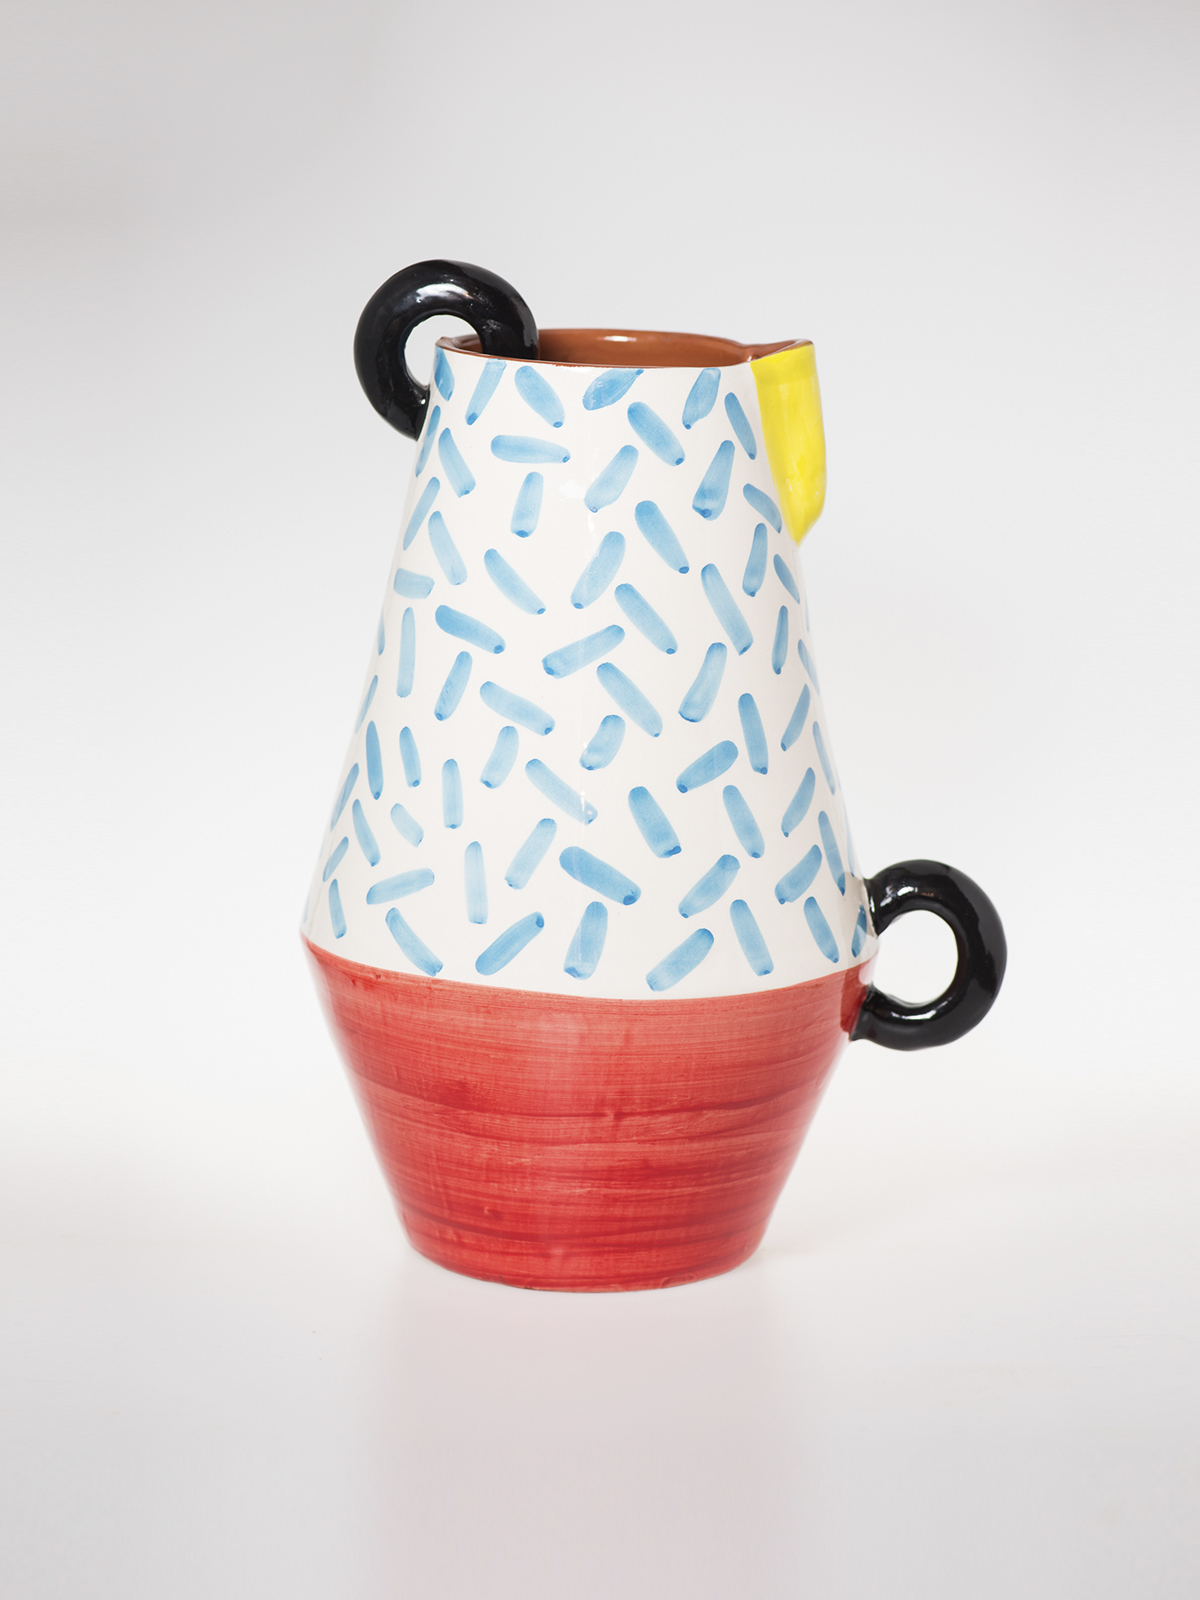 pura-cal-handmade-terracota-caneco-red-and-blue-dots-vase-zuvi-zeva-zivi